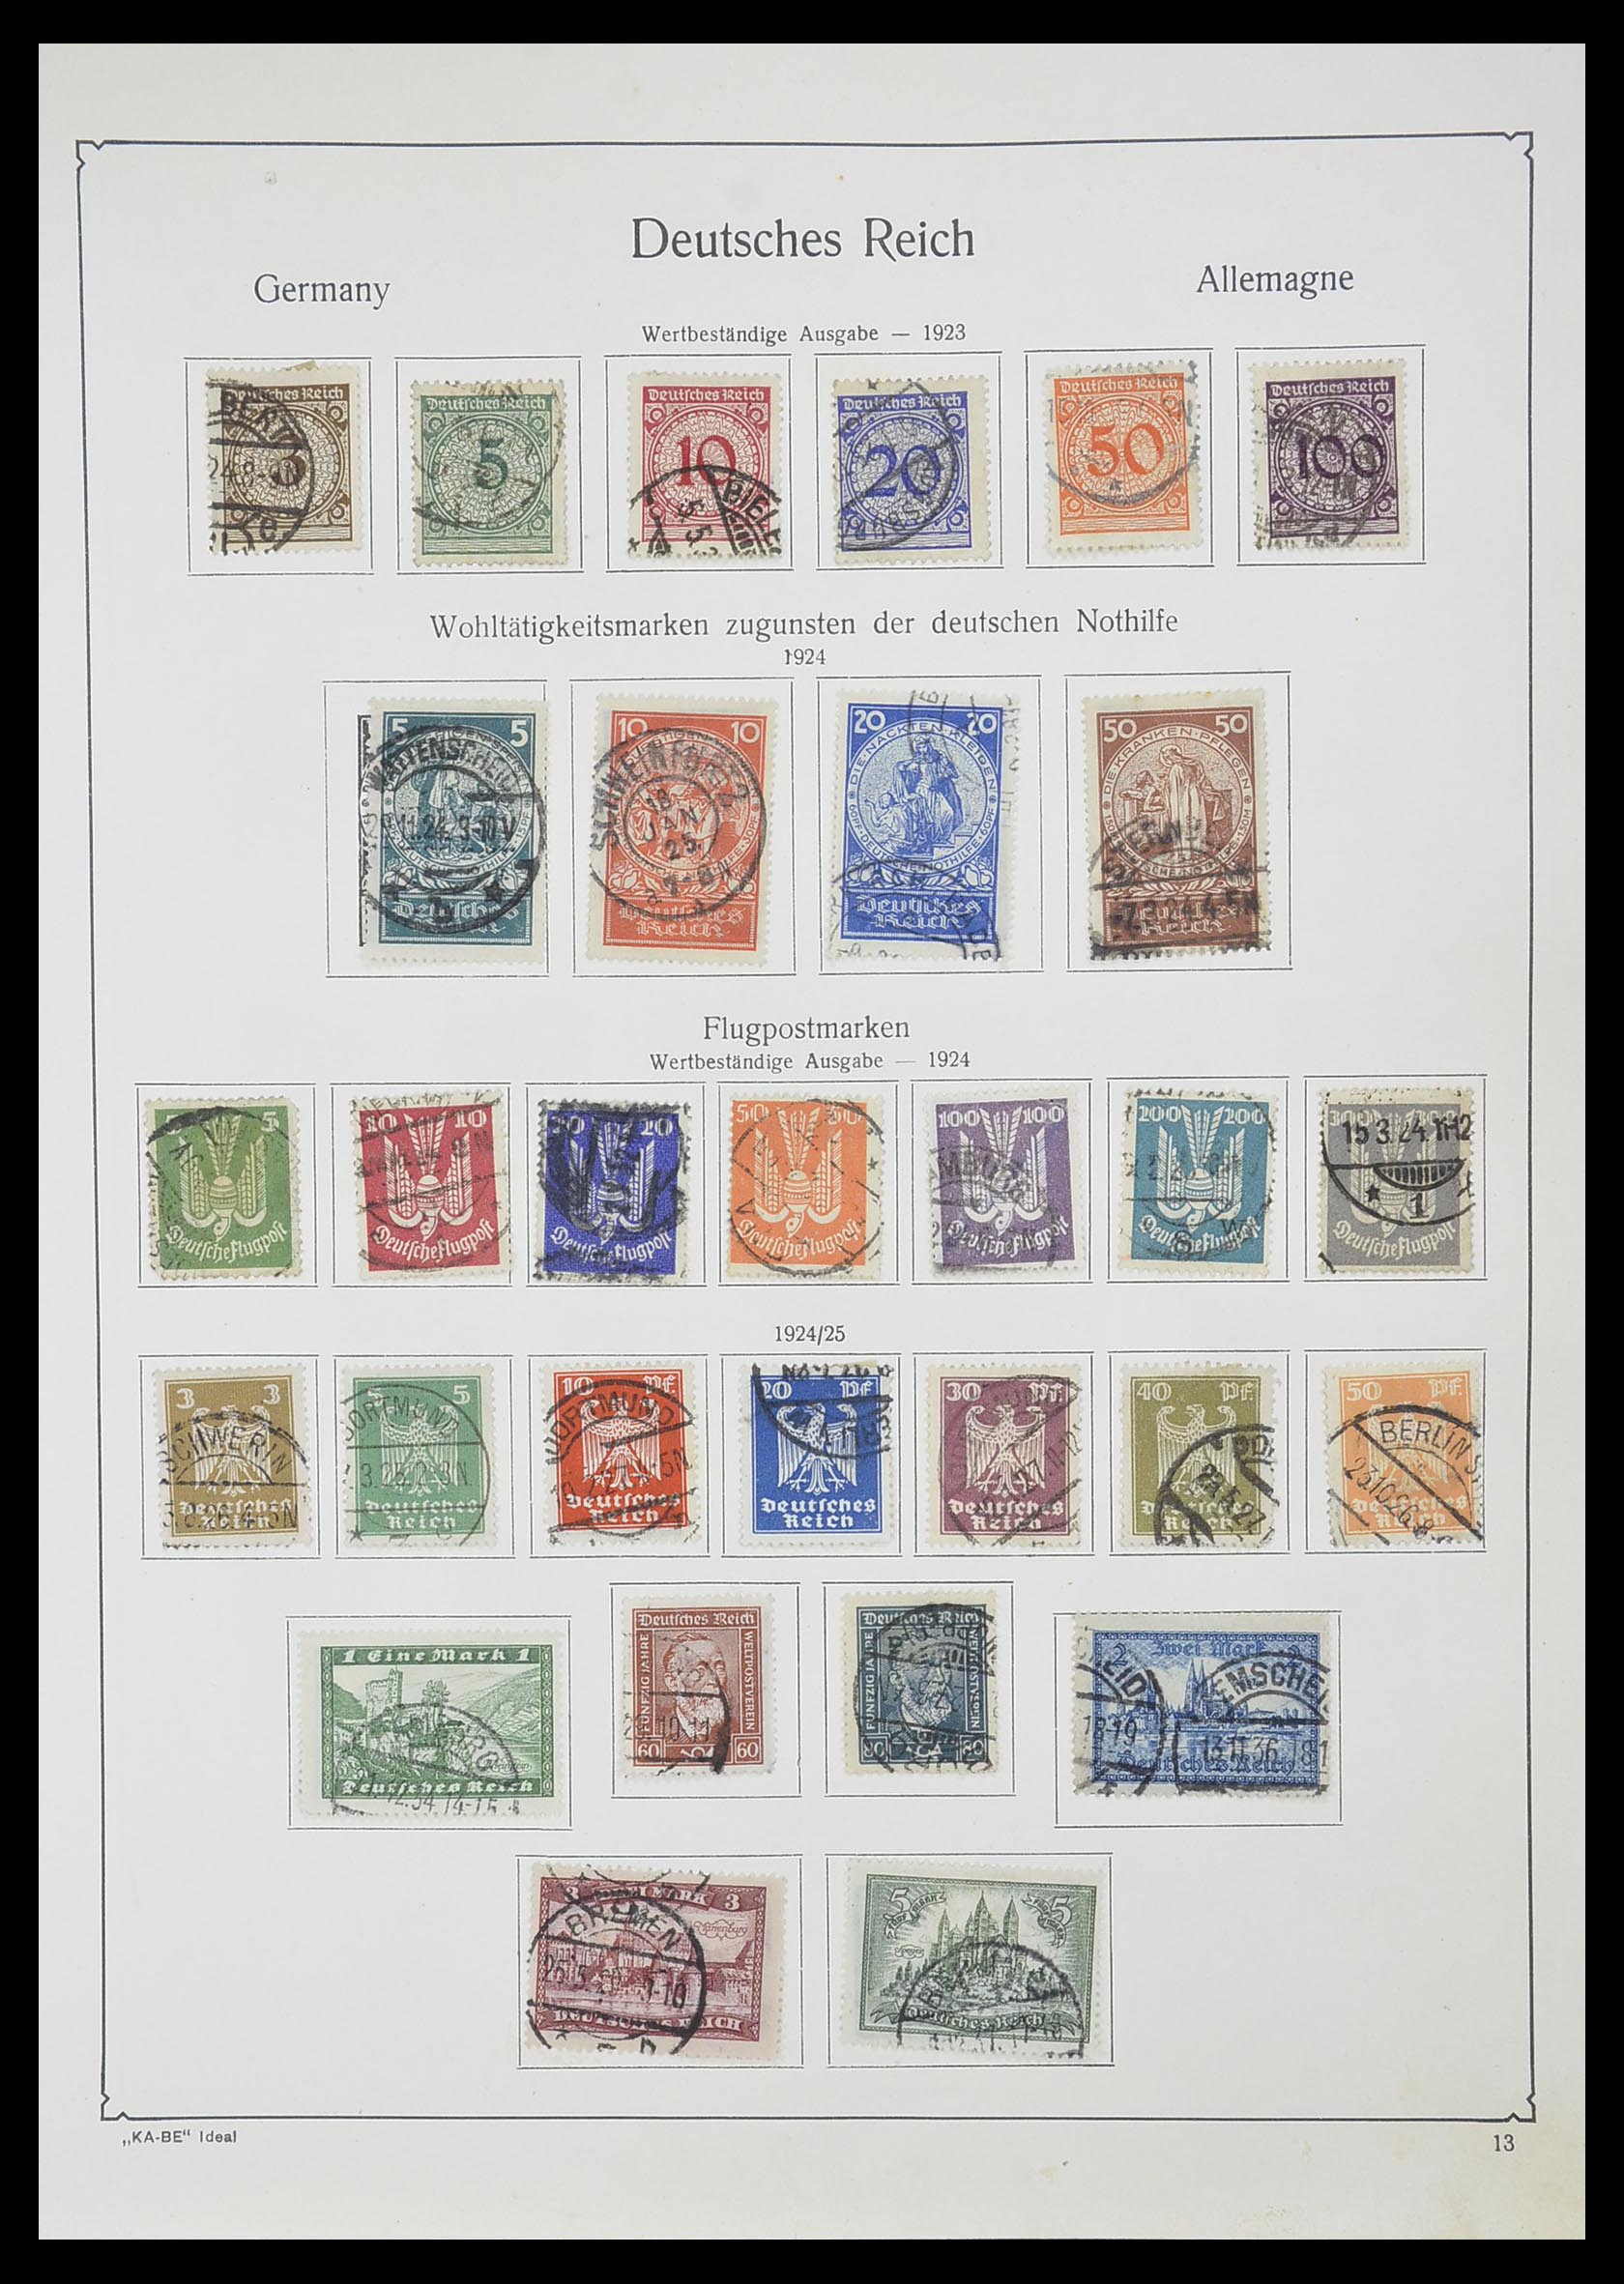 33359 018 - Stamp collection 33359 German Reich 1872-1945.